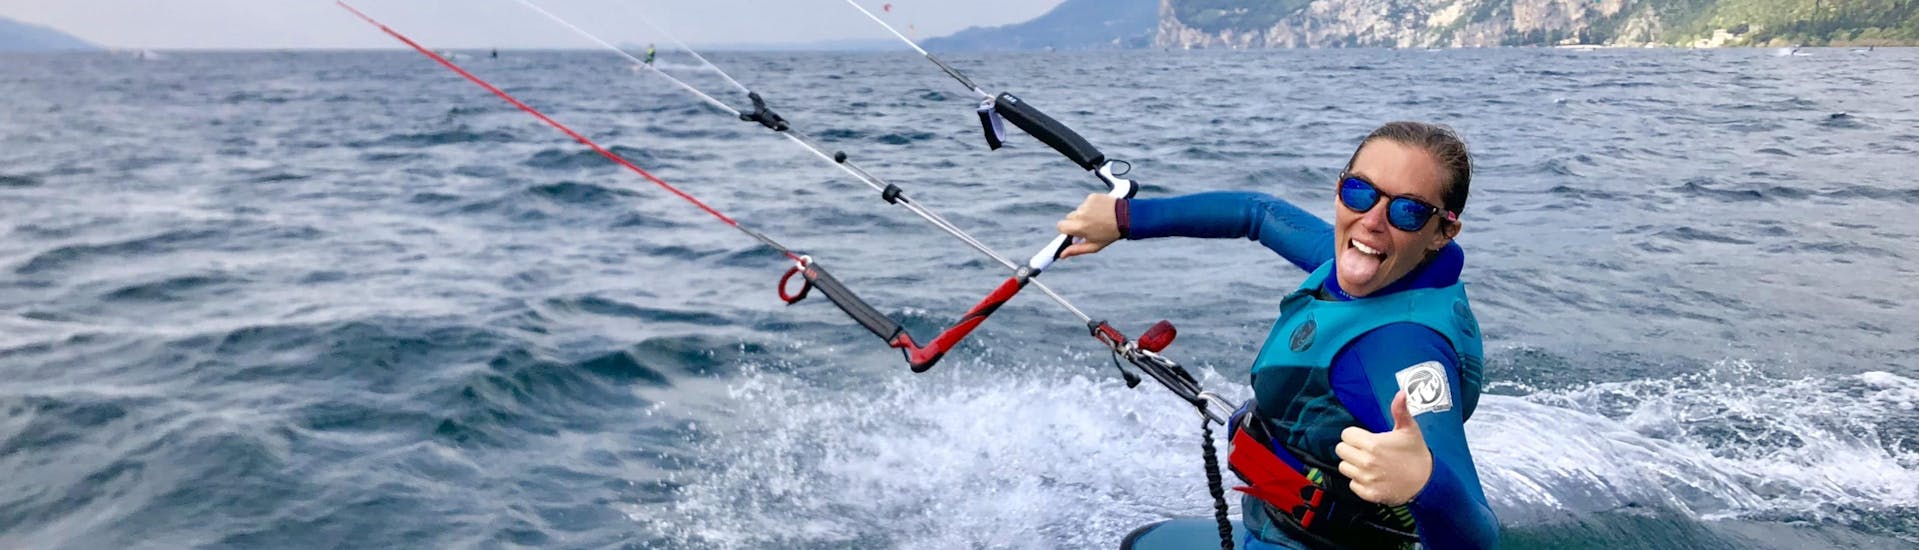 Kitesurfing Lessons for Advanced - Campione del Garda with Garda Kitesurf - Hero image